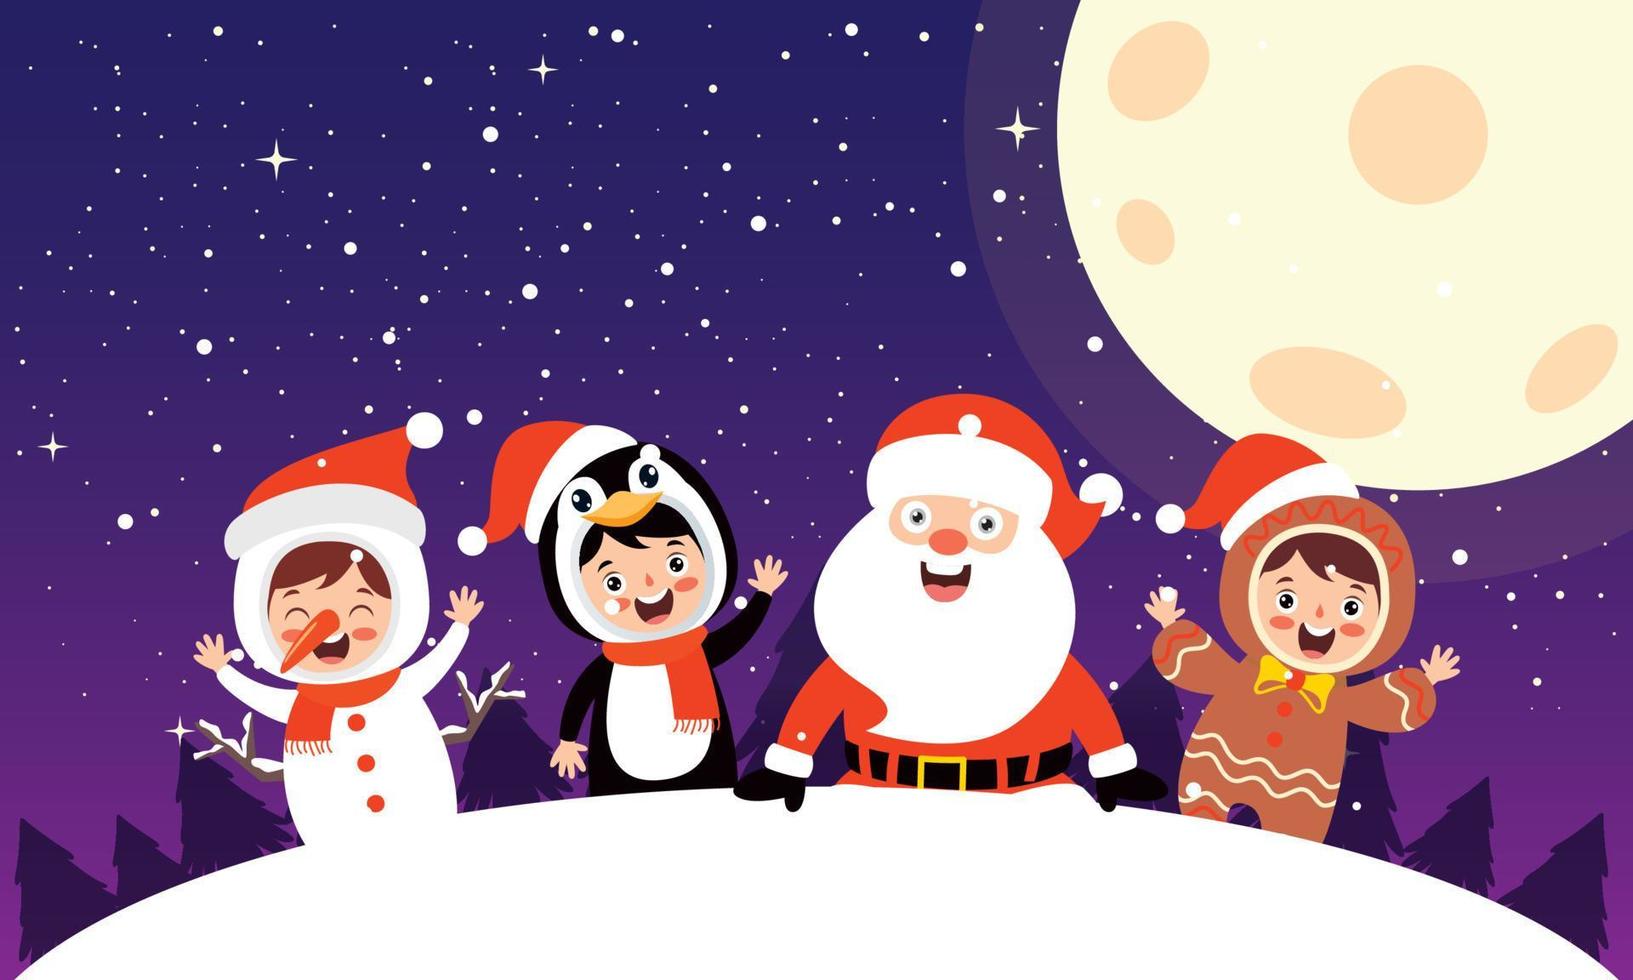 Christmas Scene With Cartoon Characters vector